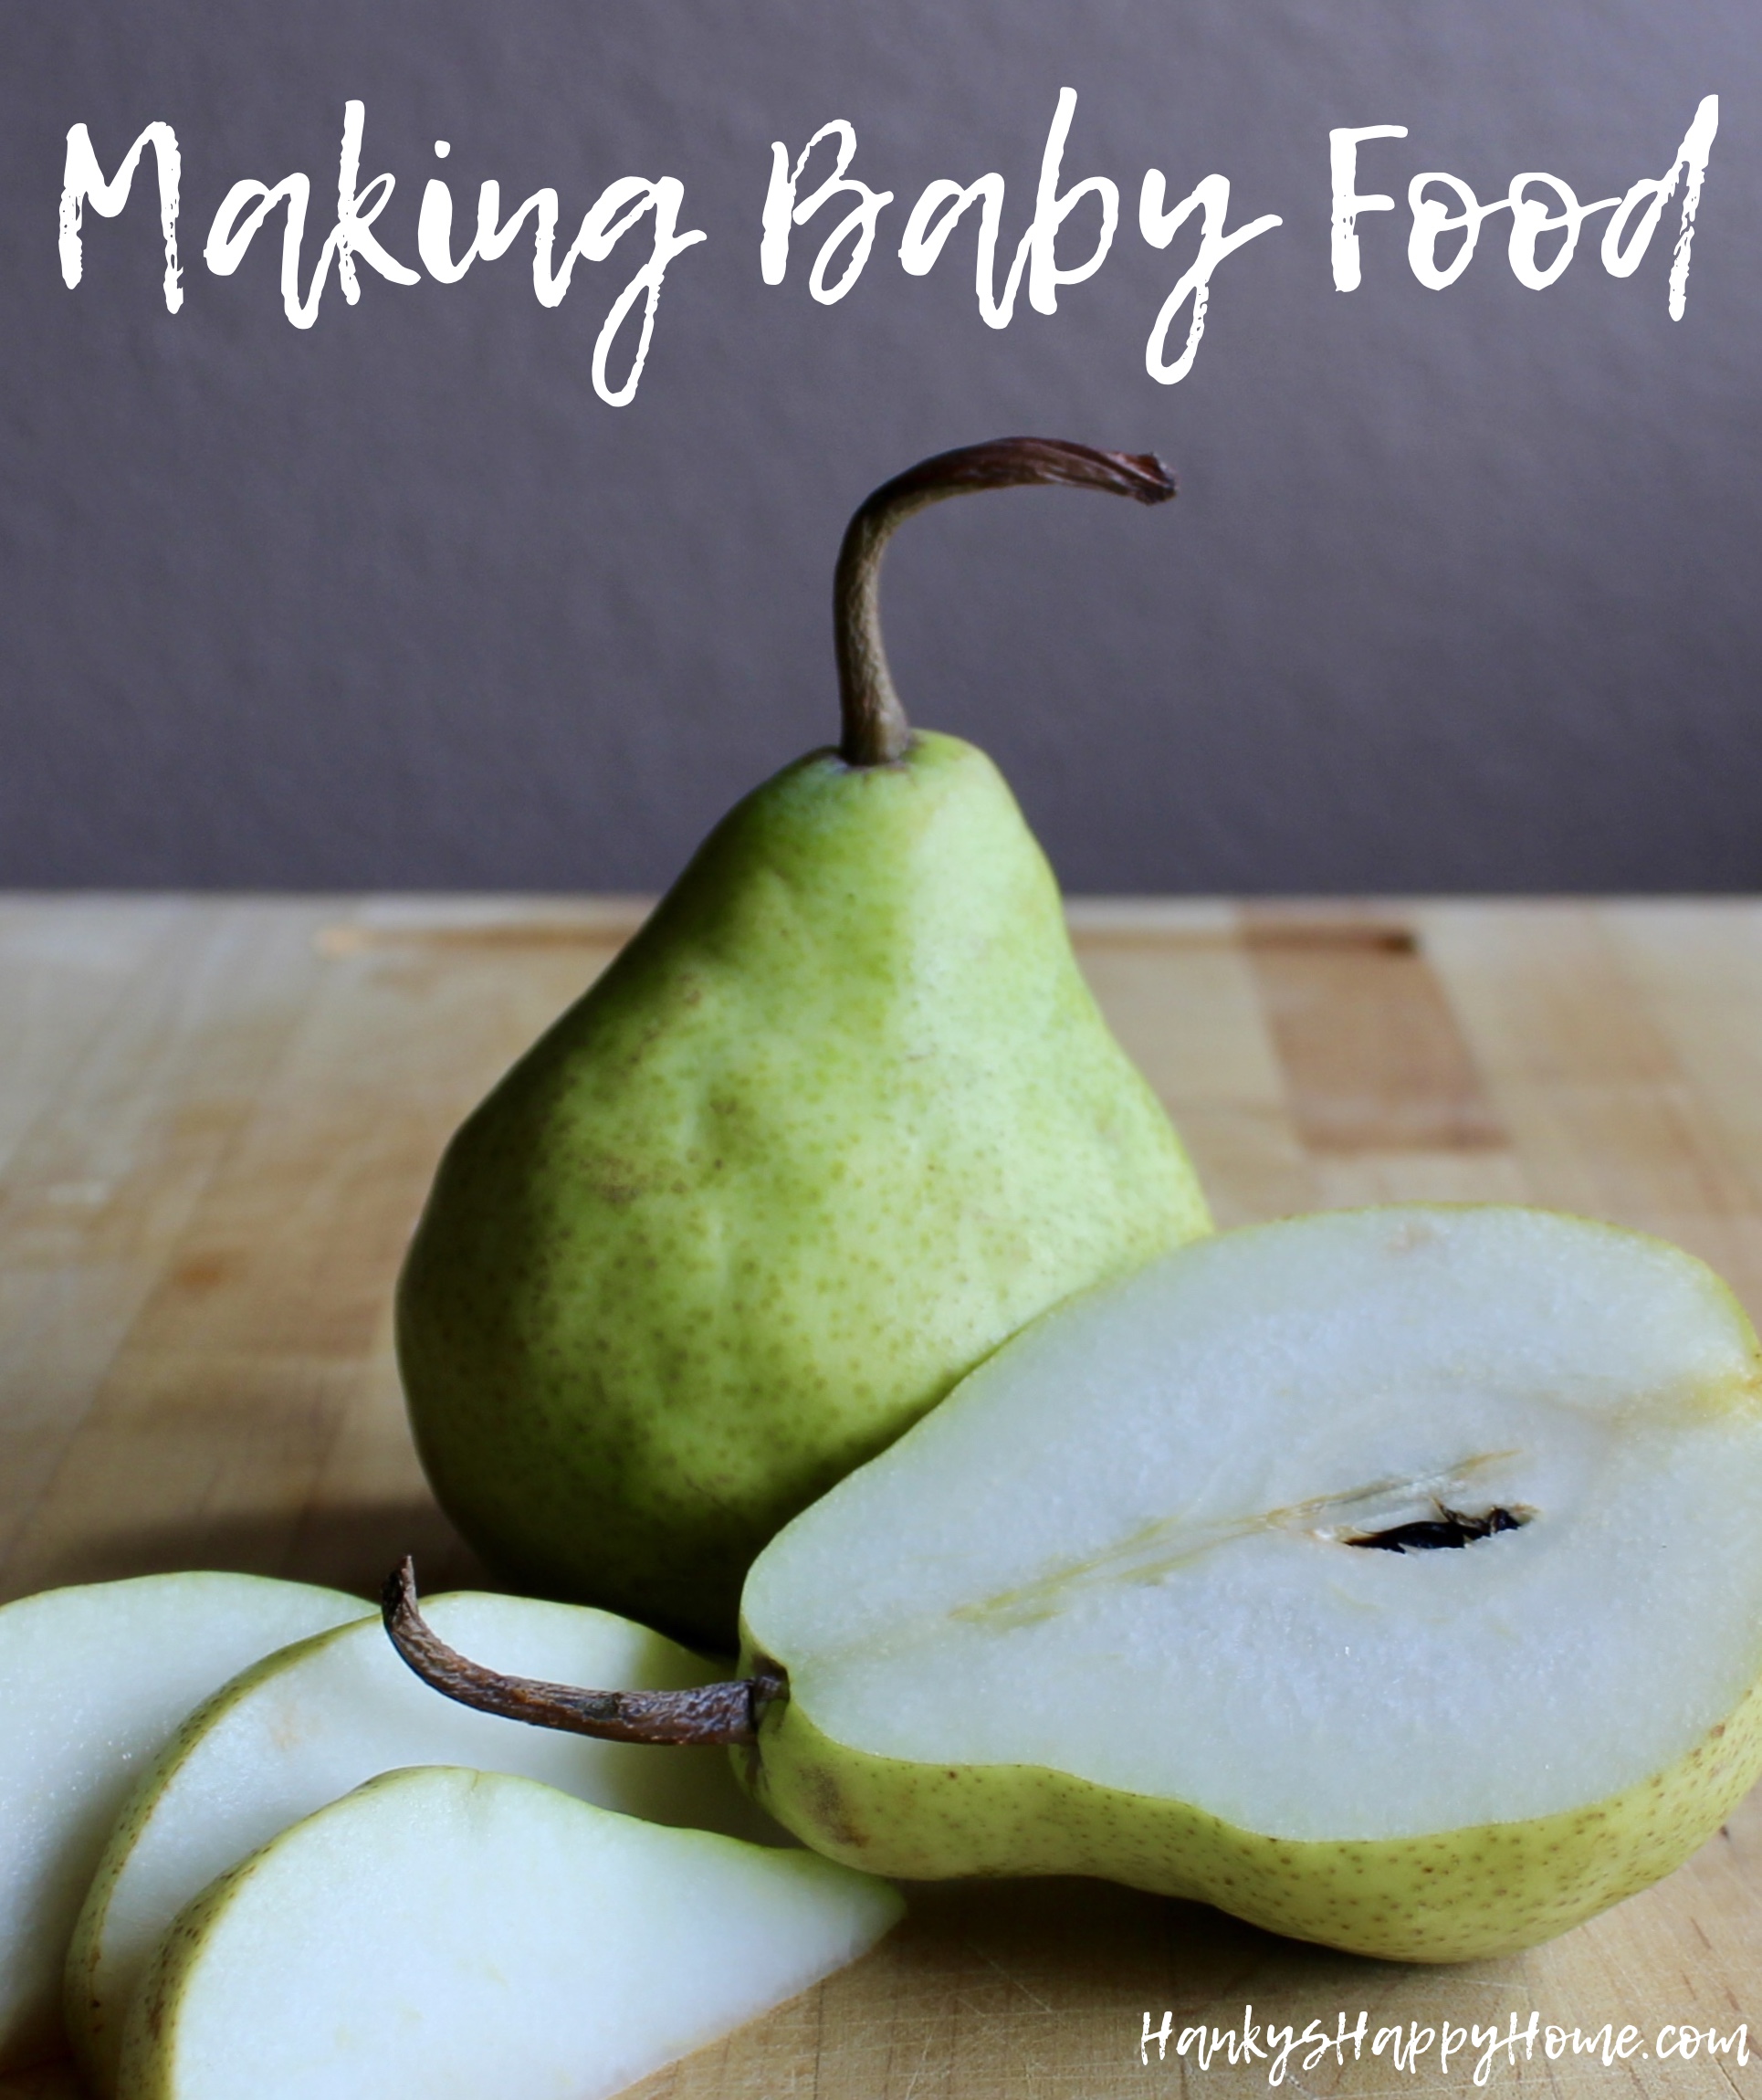 Making Baby Food | Hanky's Happy Home